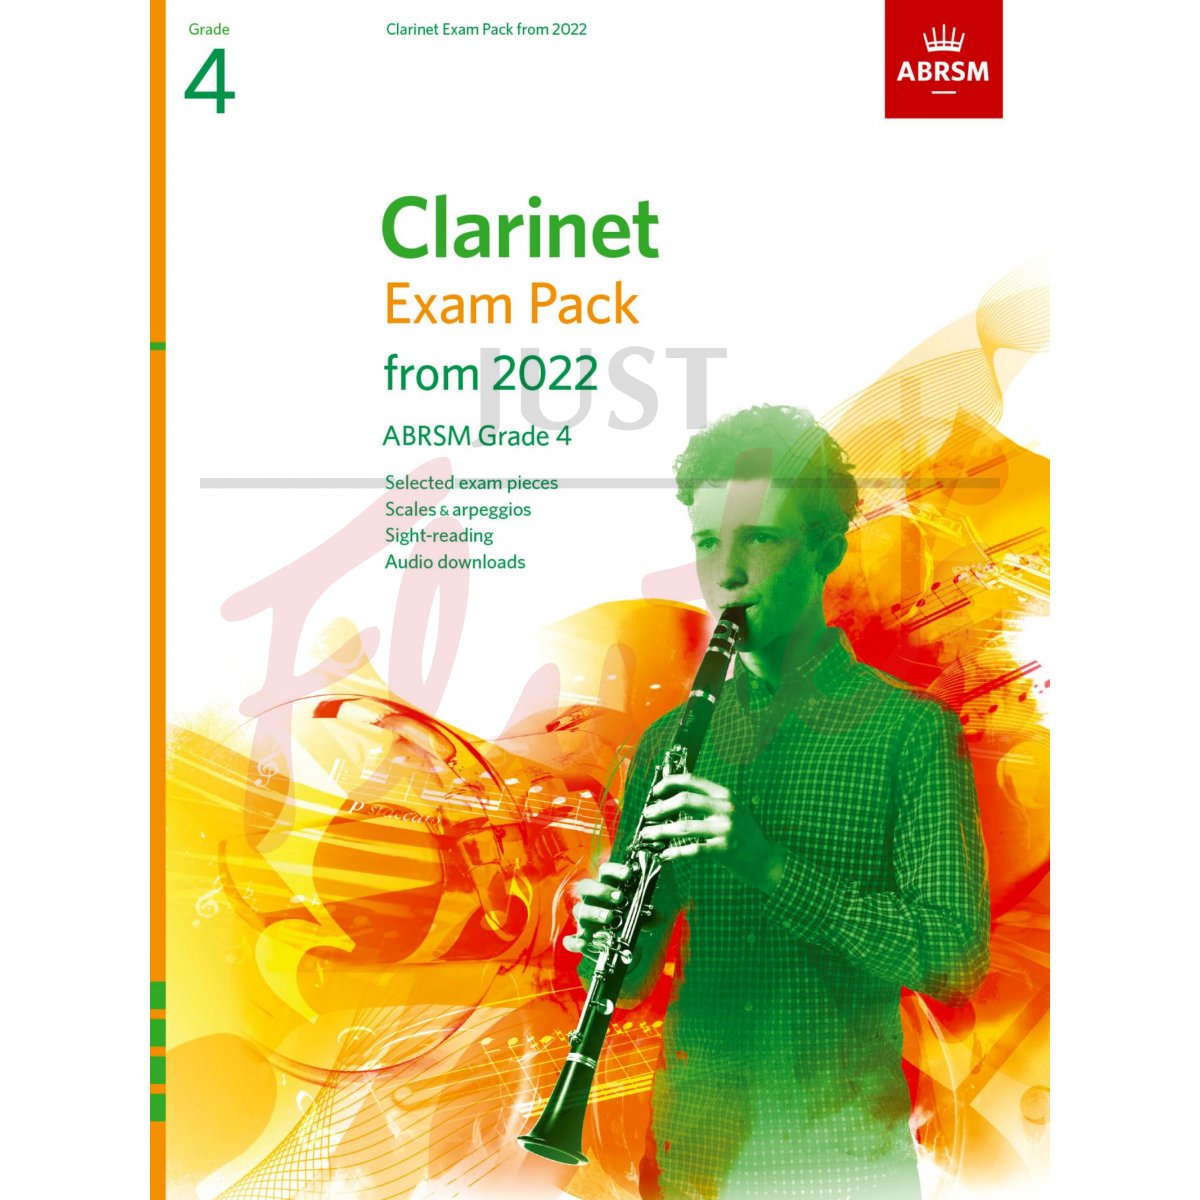 Clarinet Exam Pack from 2022 Grade 4